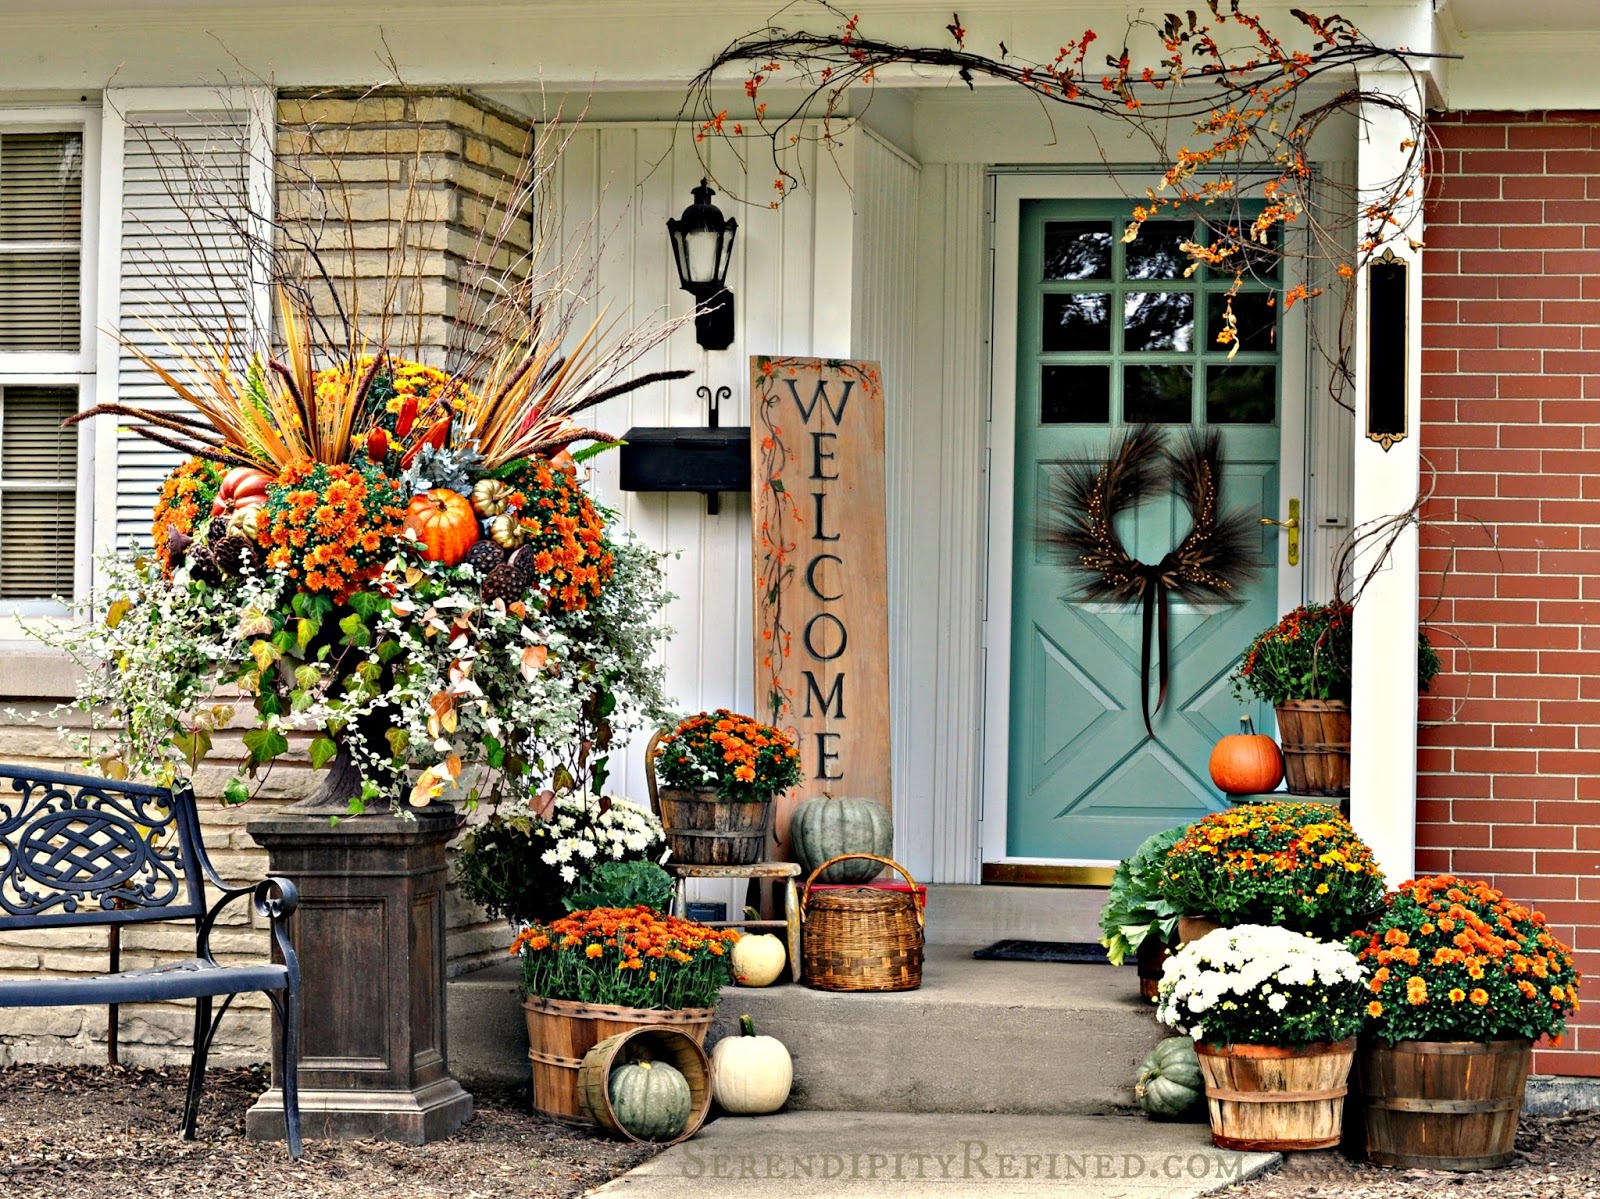 Fall-porch-outdoor-decorating-idea-simple-harvest-baskets-pumpkins-mums-bittersweet